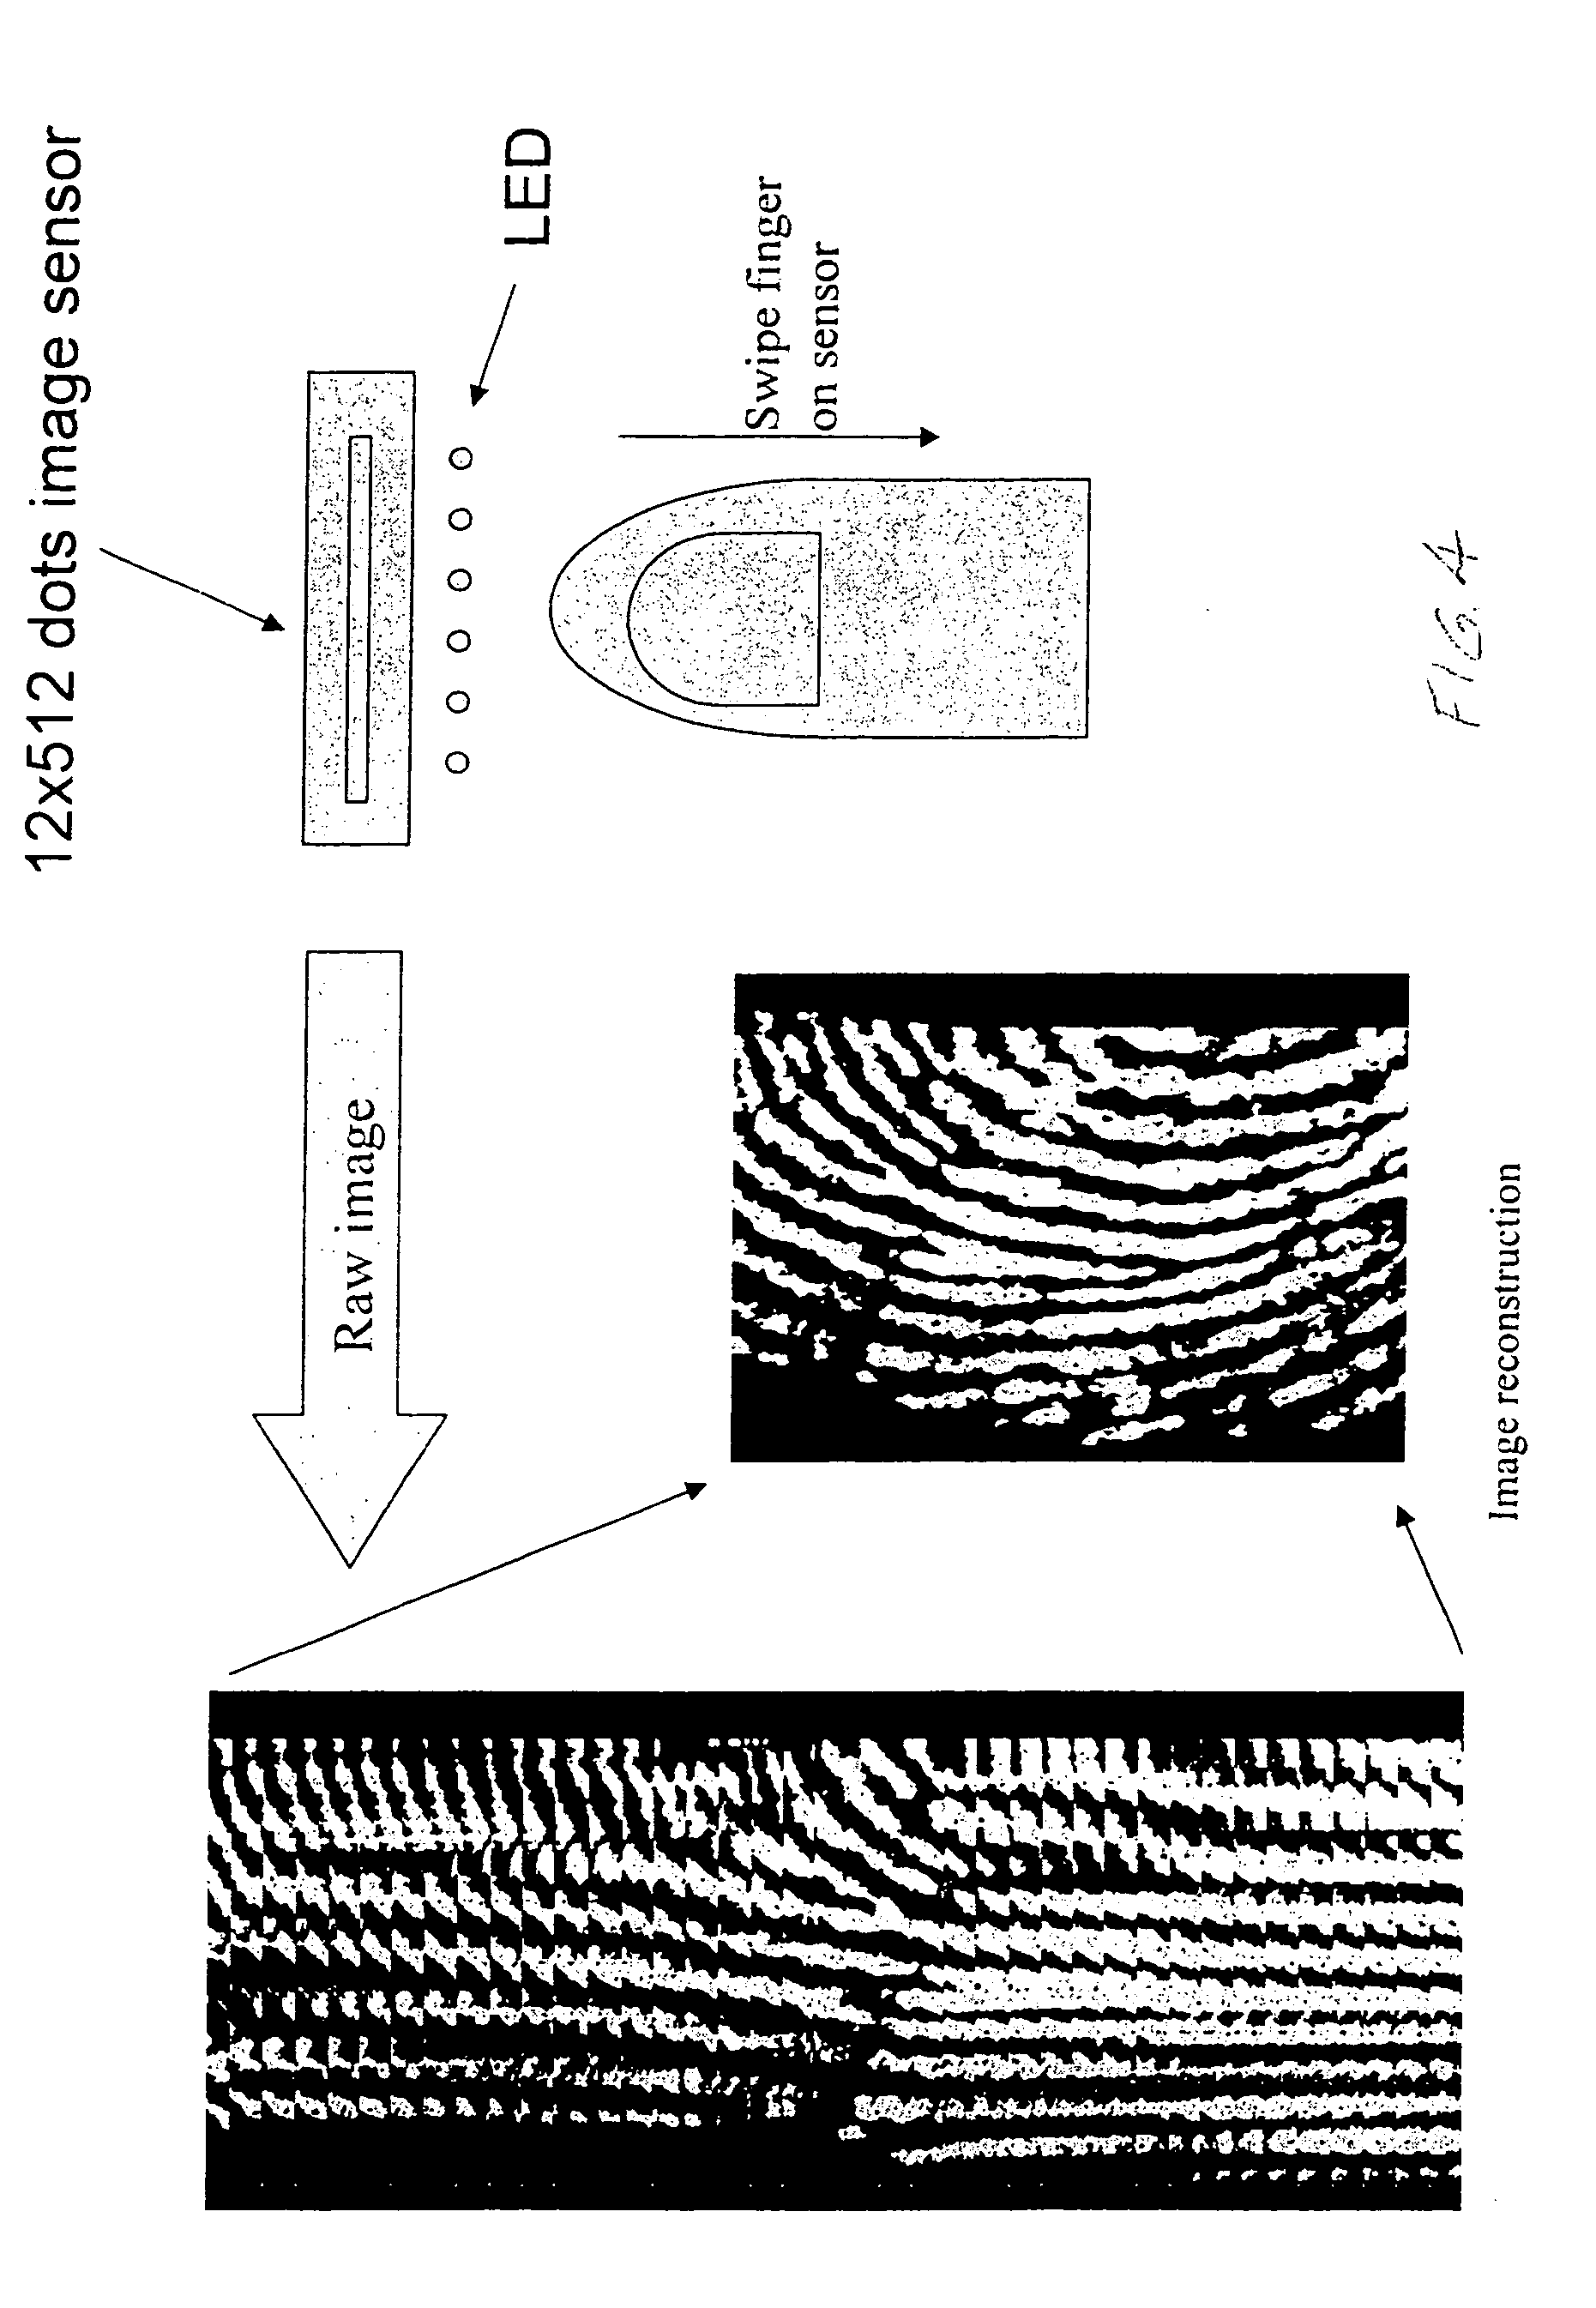 Fingerprint apparatus and method